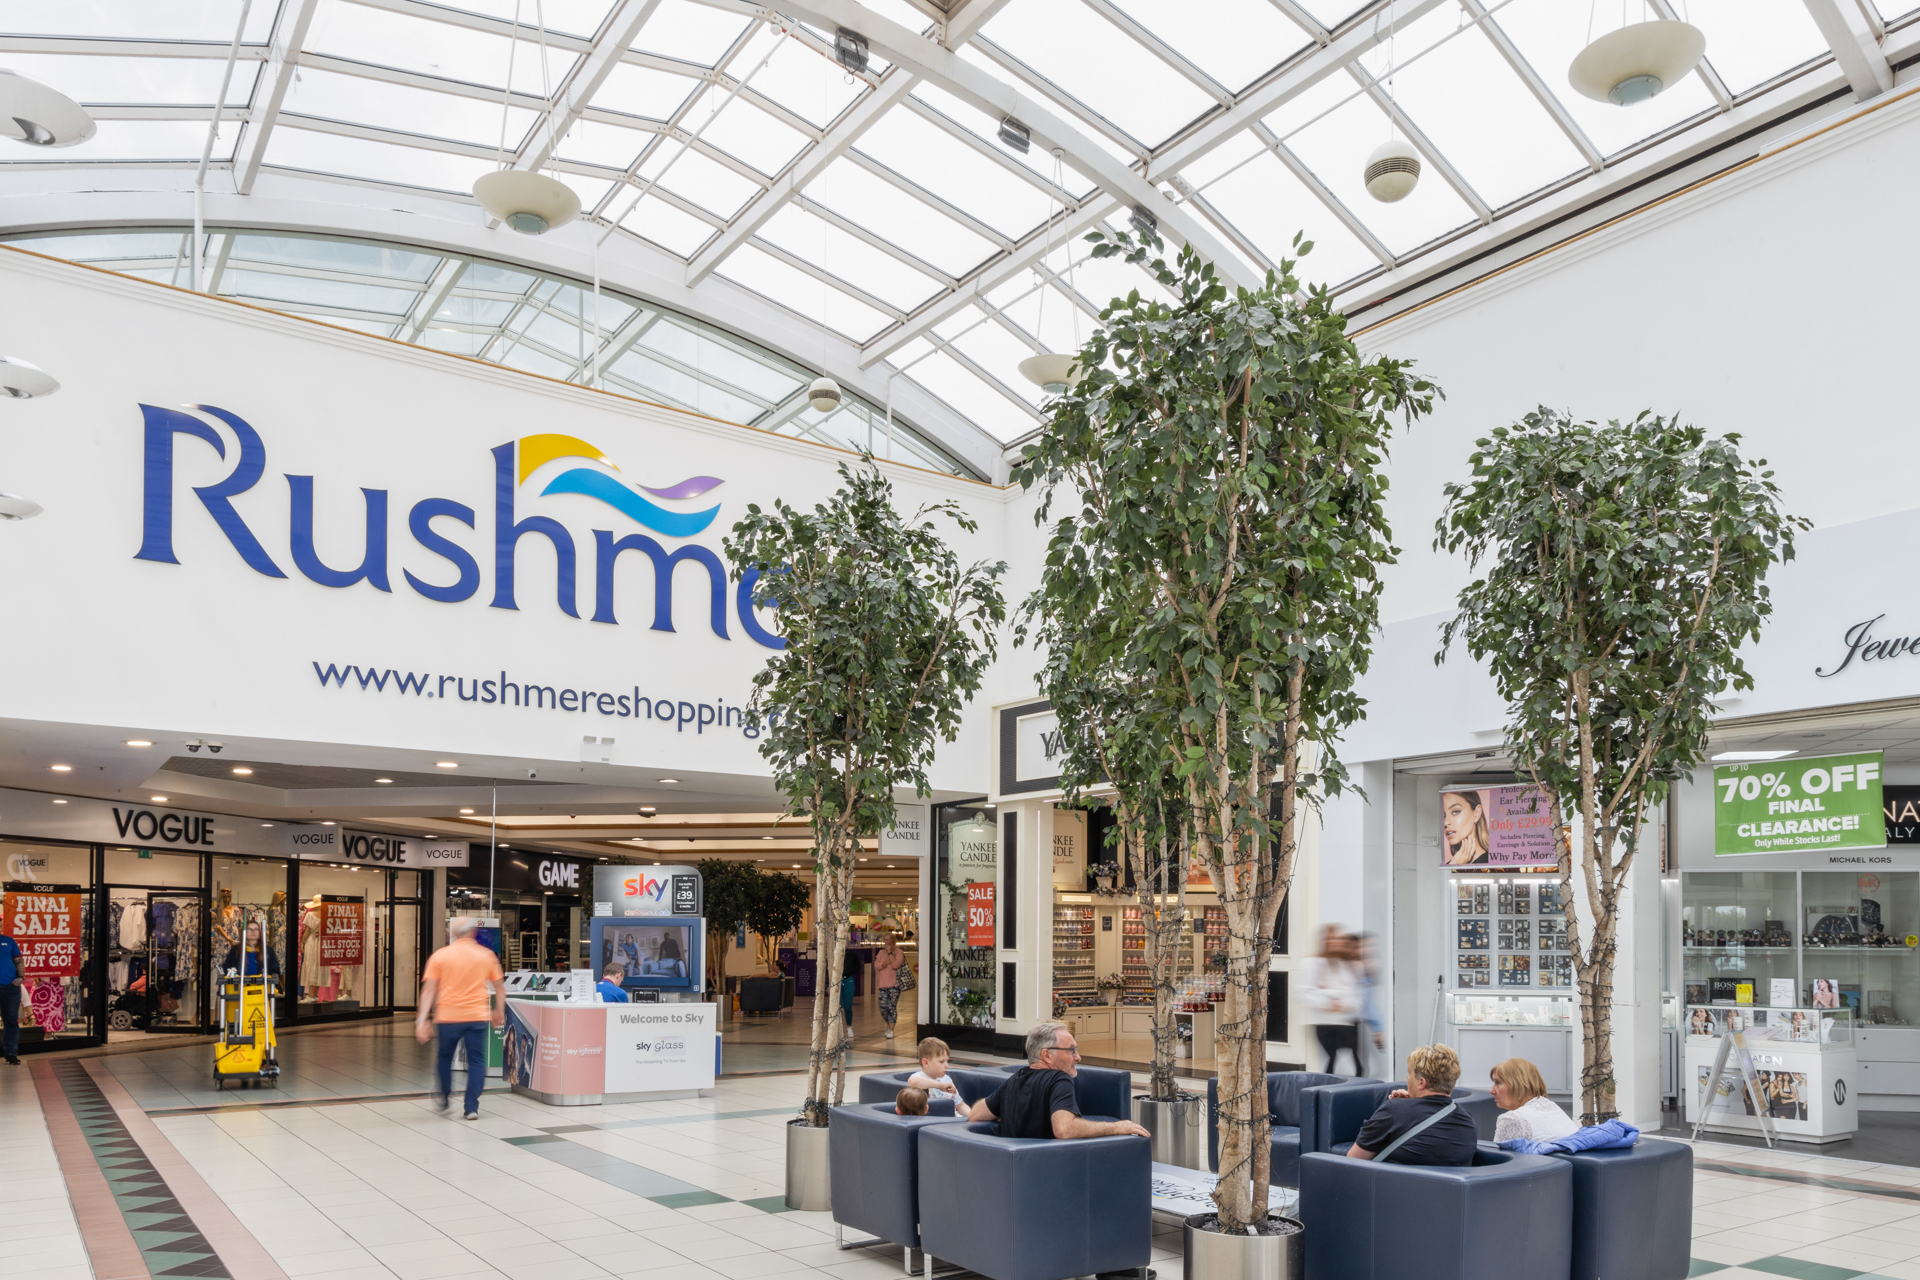 Rushmere Shopping Centre sold to private investors